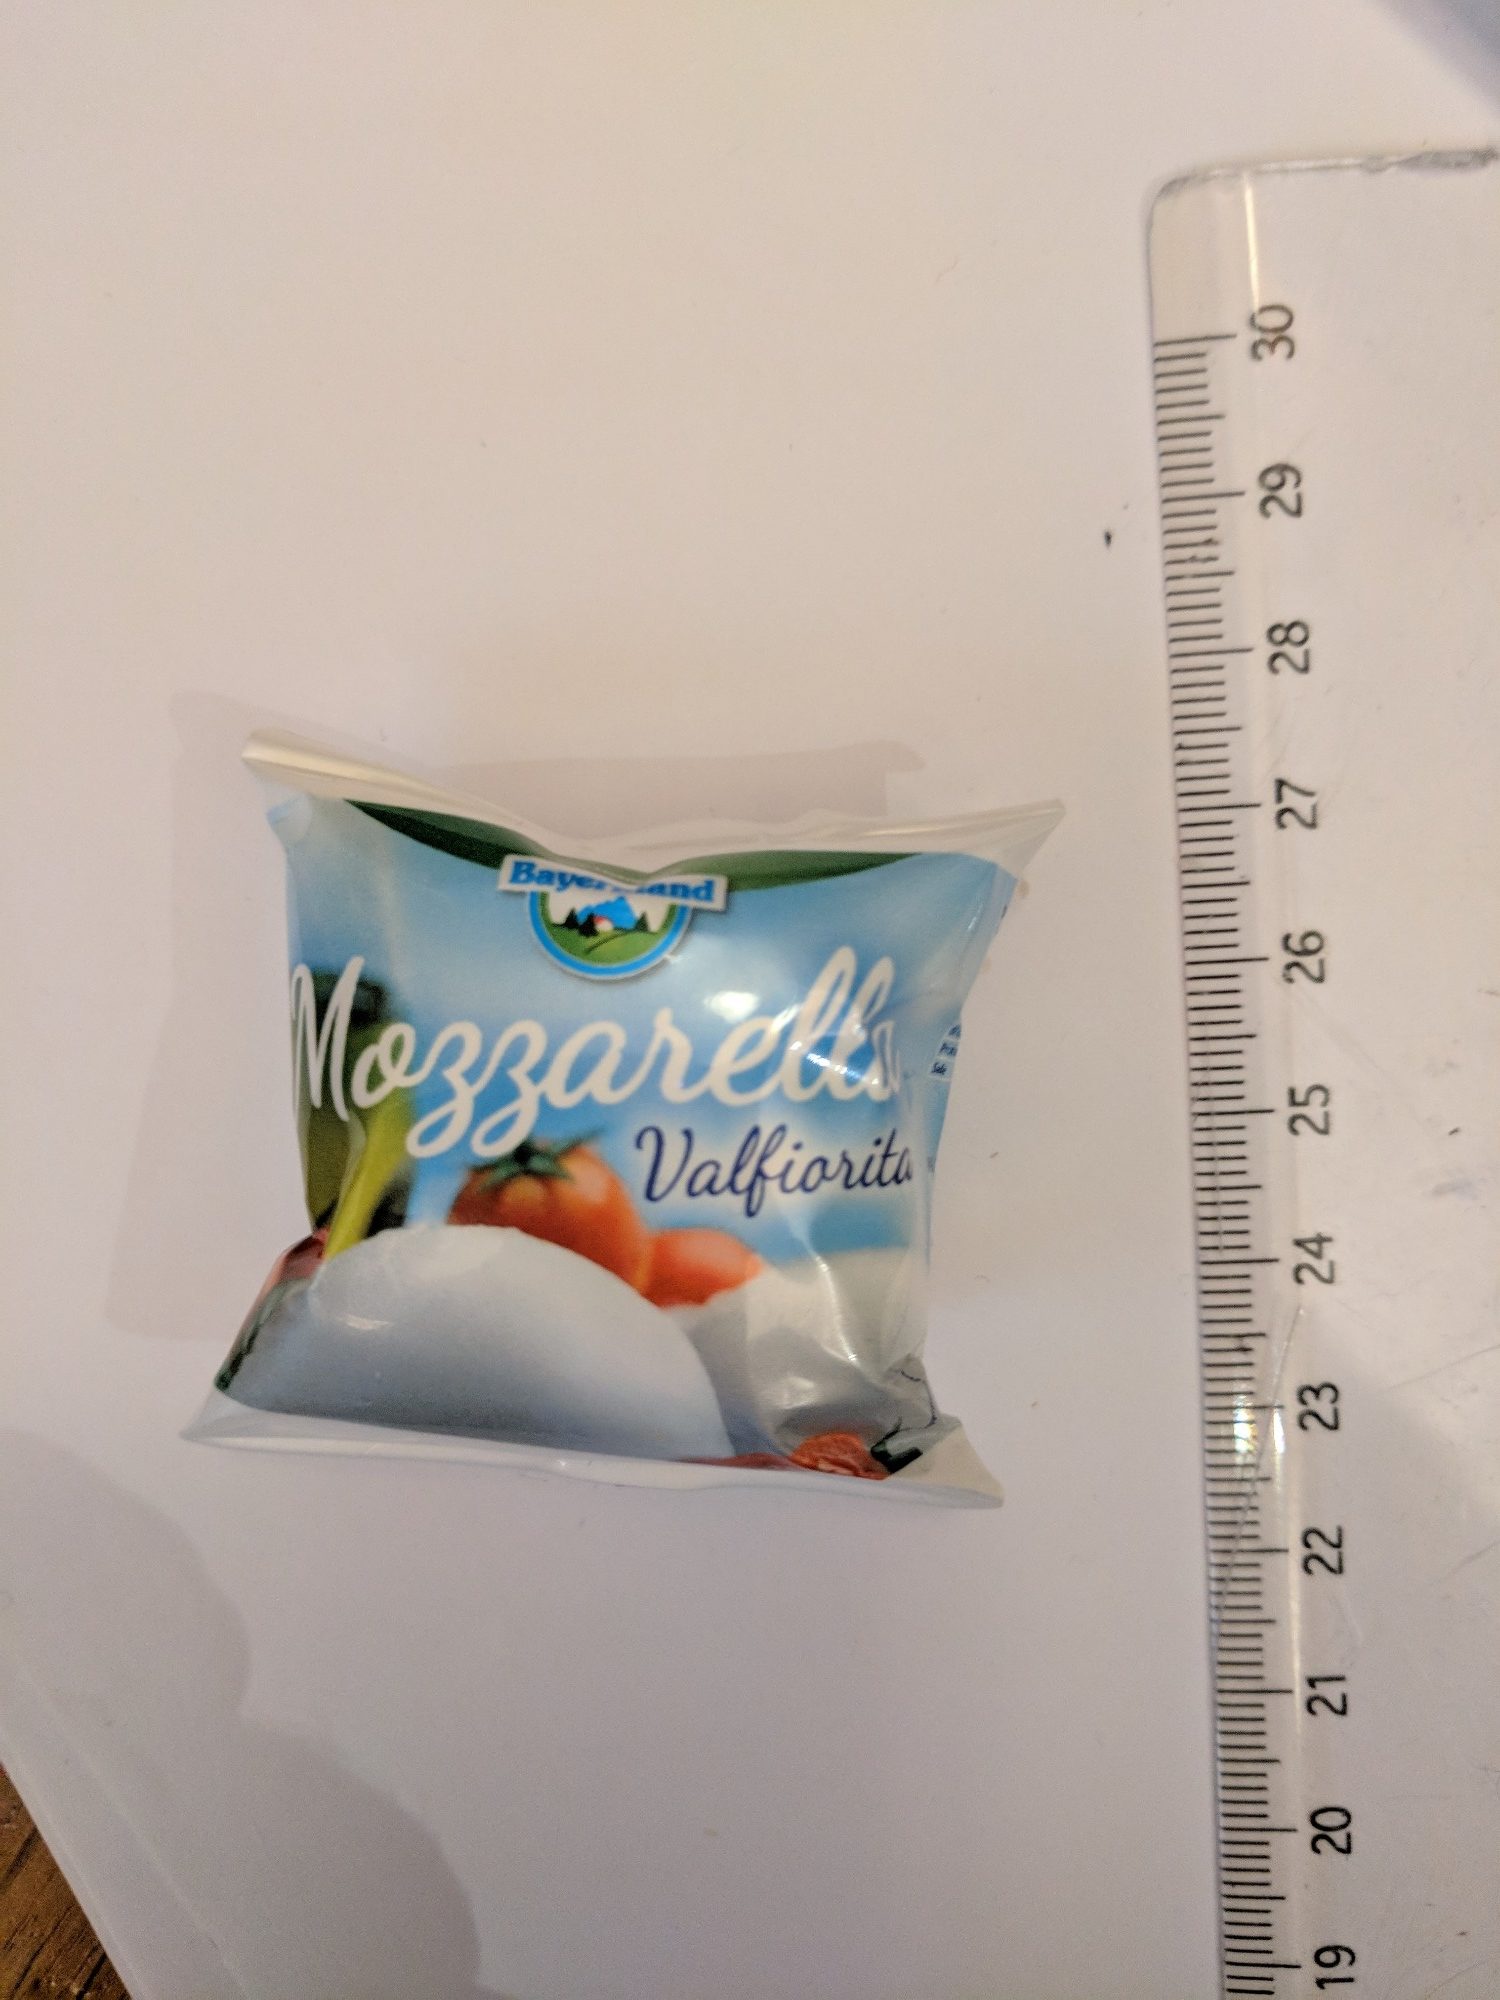 Miniature Mozzarella Valfiorita - Product - en